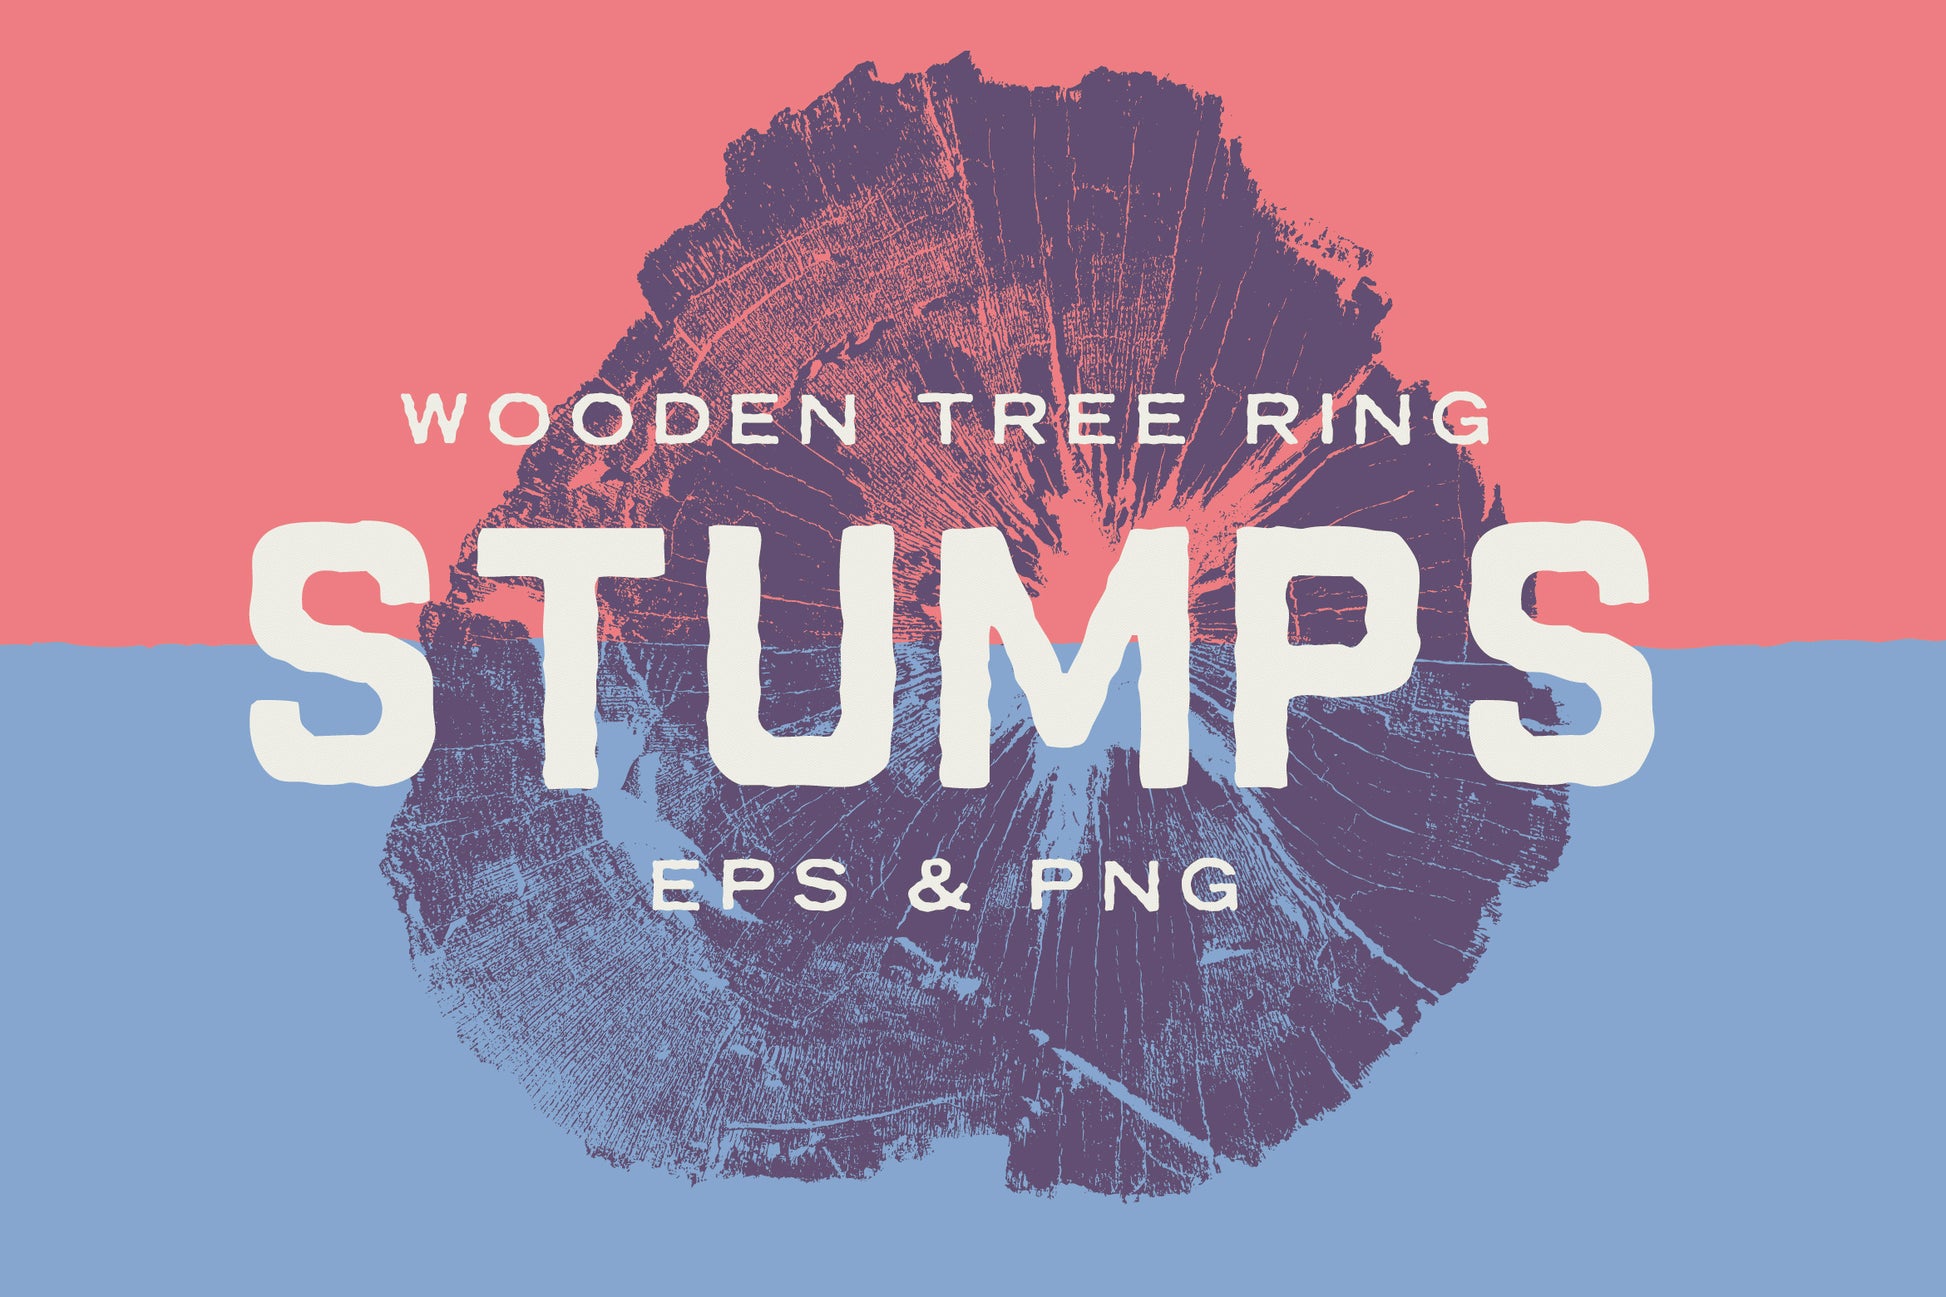 Wooden tree stump images